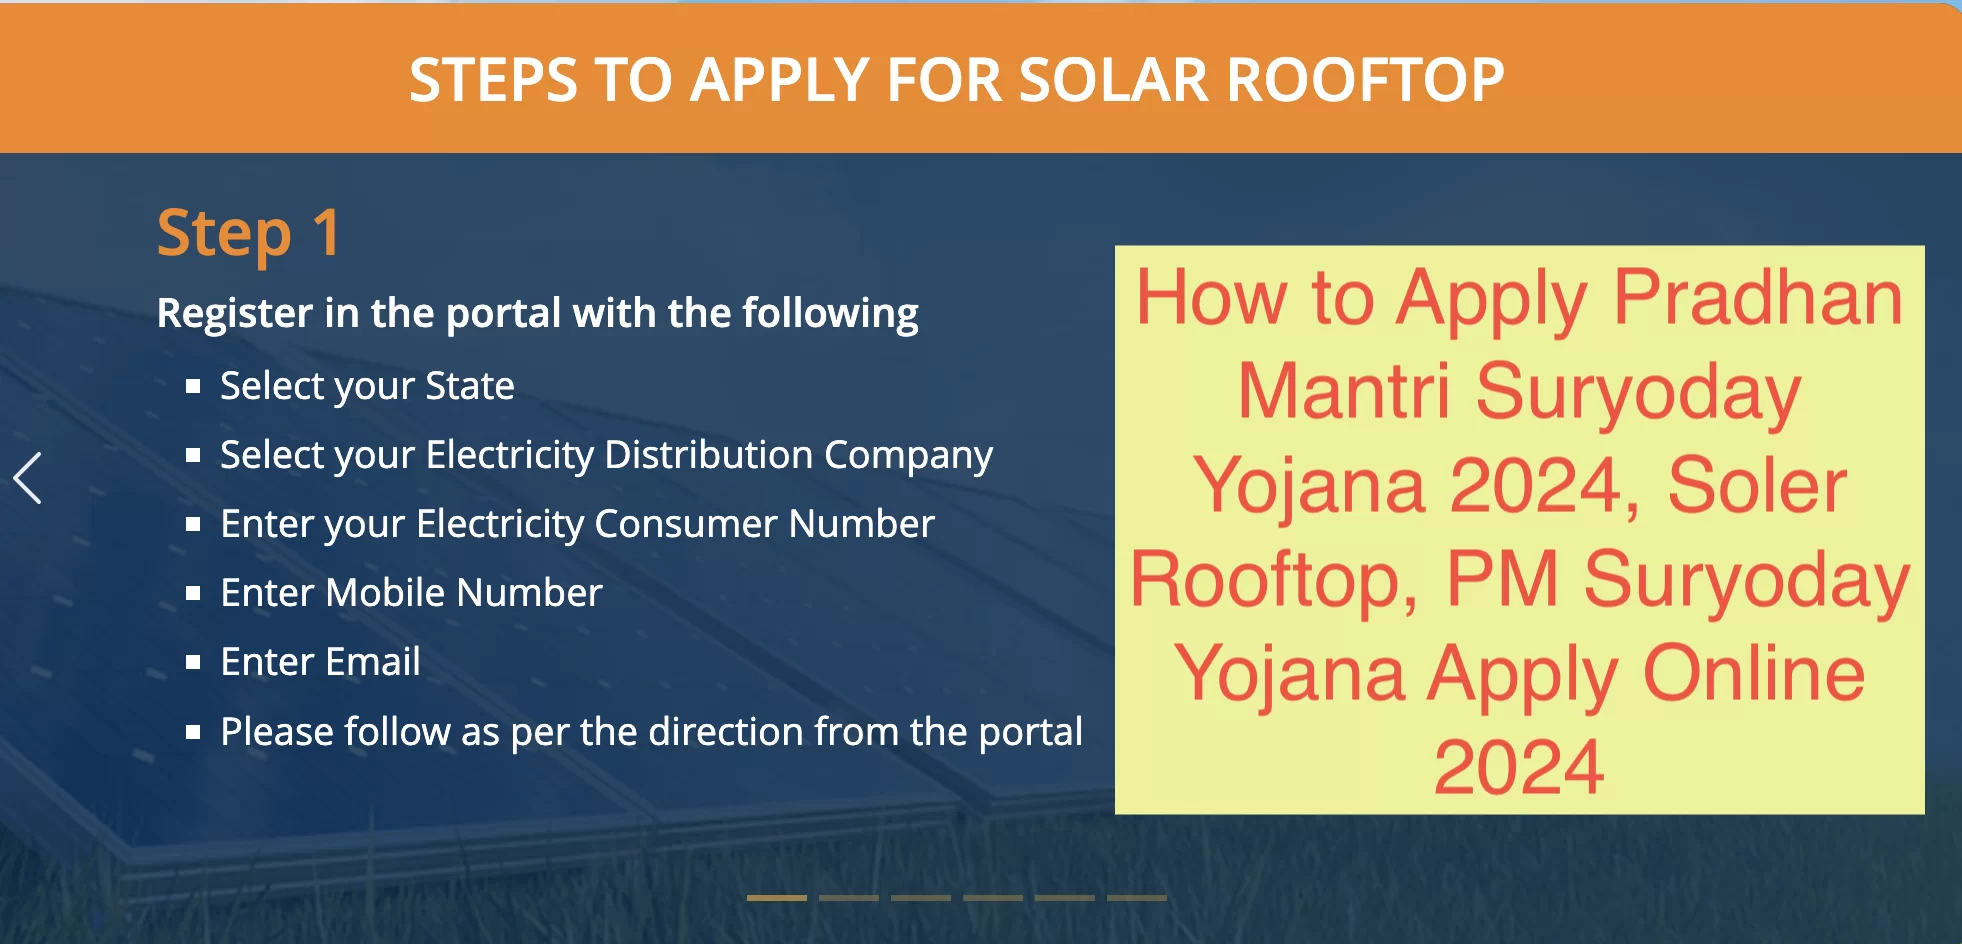 How to Apply Pradhan Mantri Suryoday Yojana 2024, Soler Rooftop, PM Suryoday Yojana Apply Online